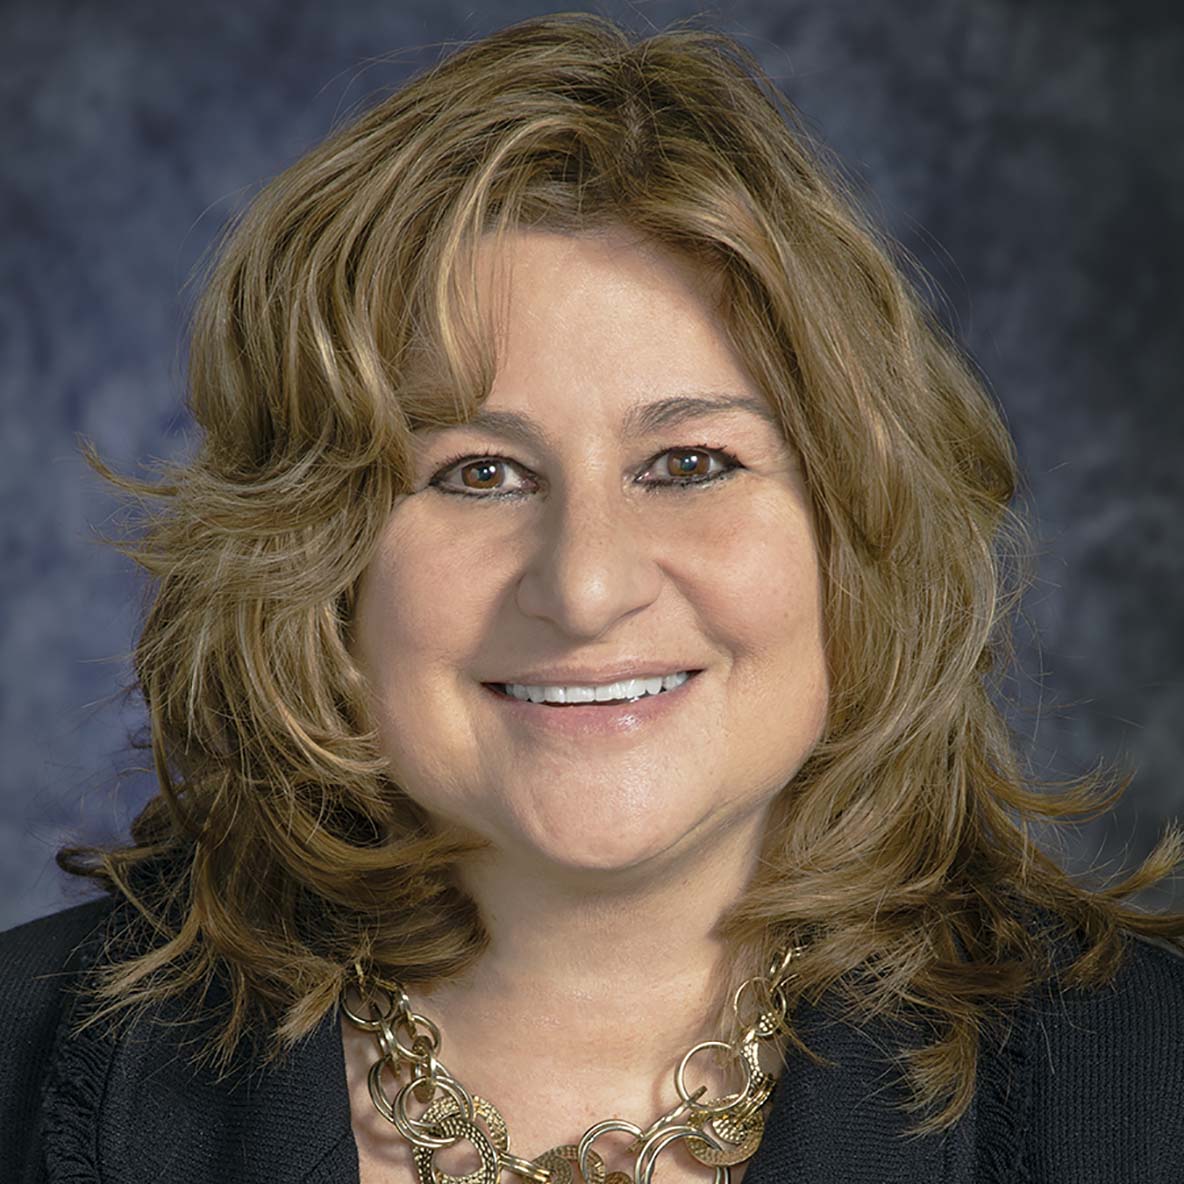  Cheryl Capps, Senior Vice President, Global Supply Chain